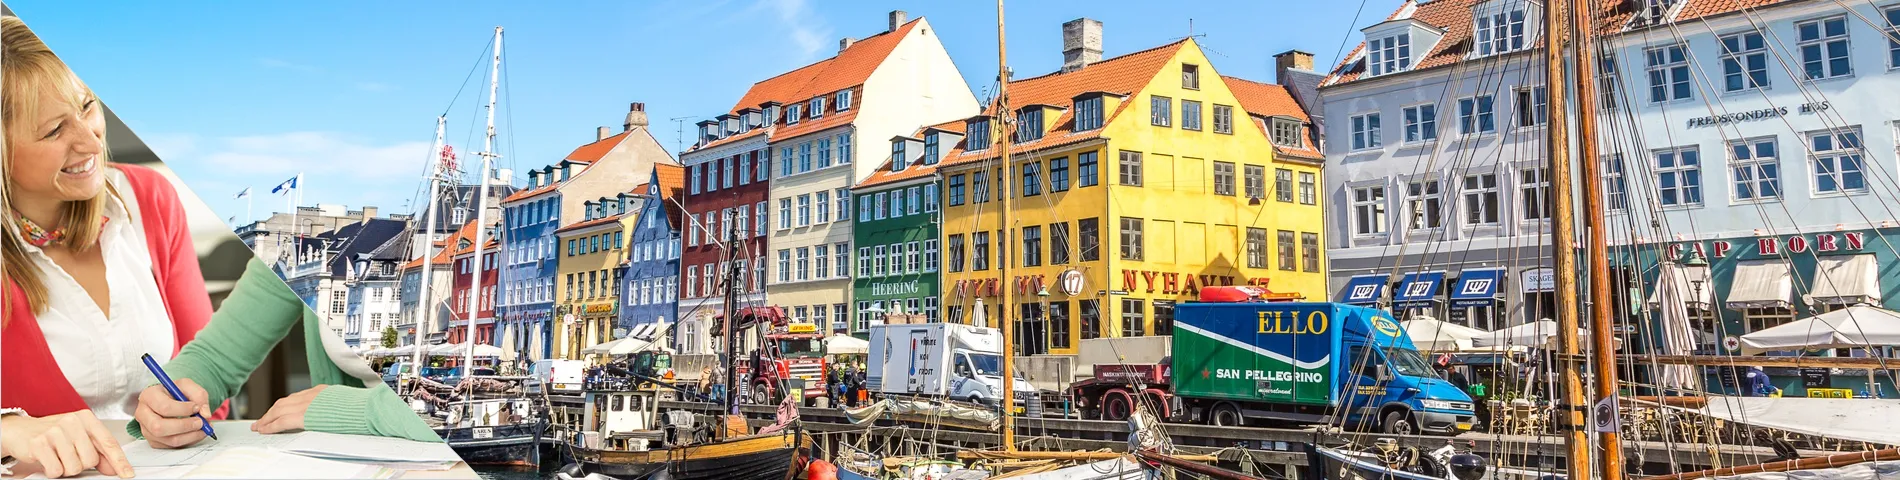 Kodaň - Studujte a žijte u svého učitele